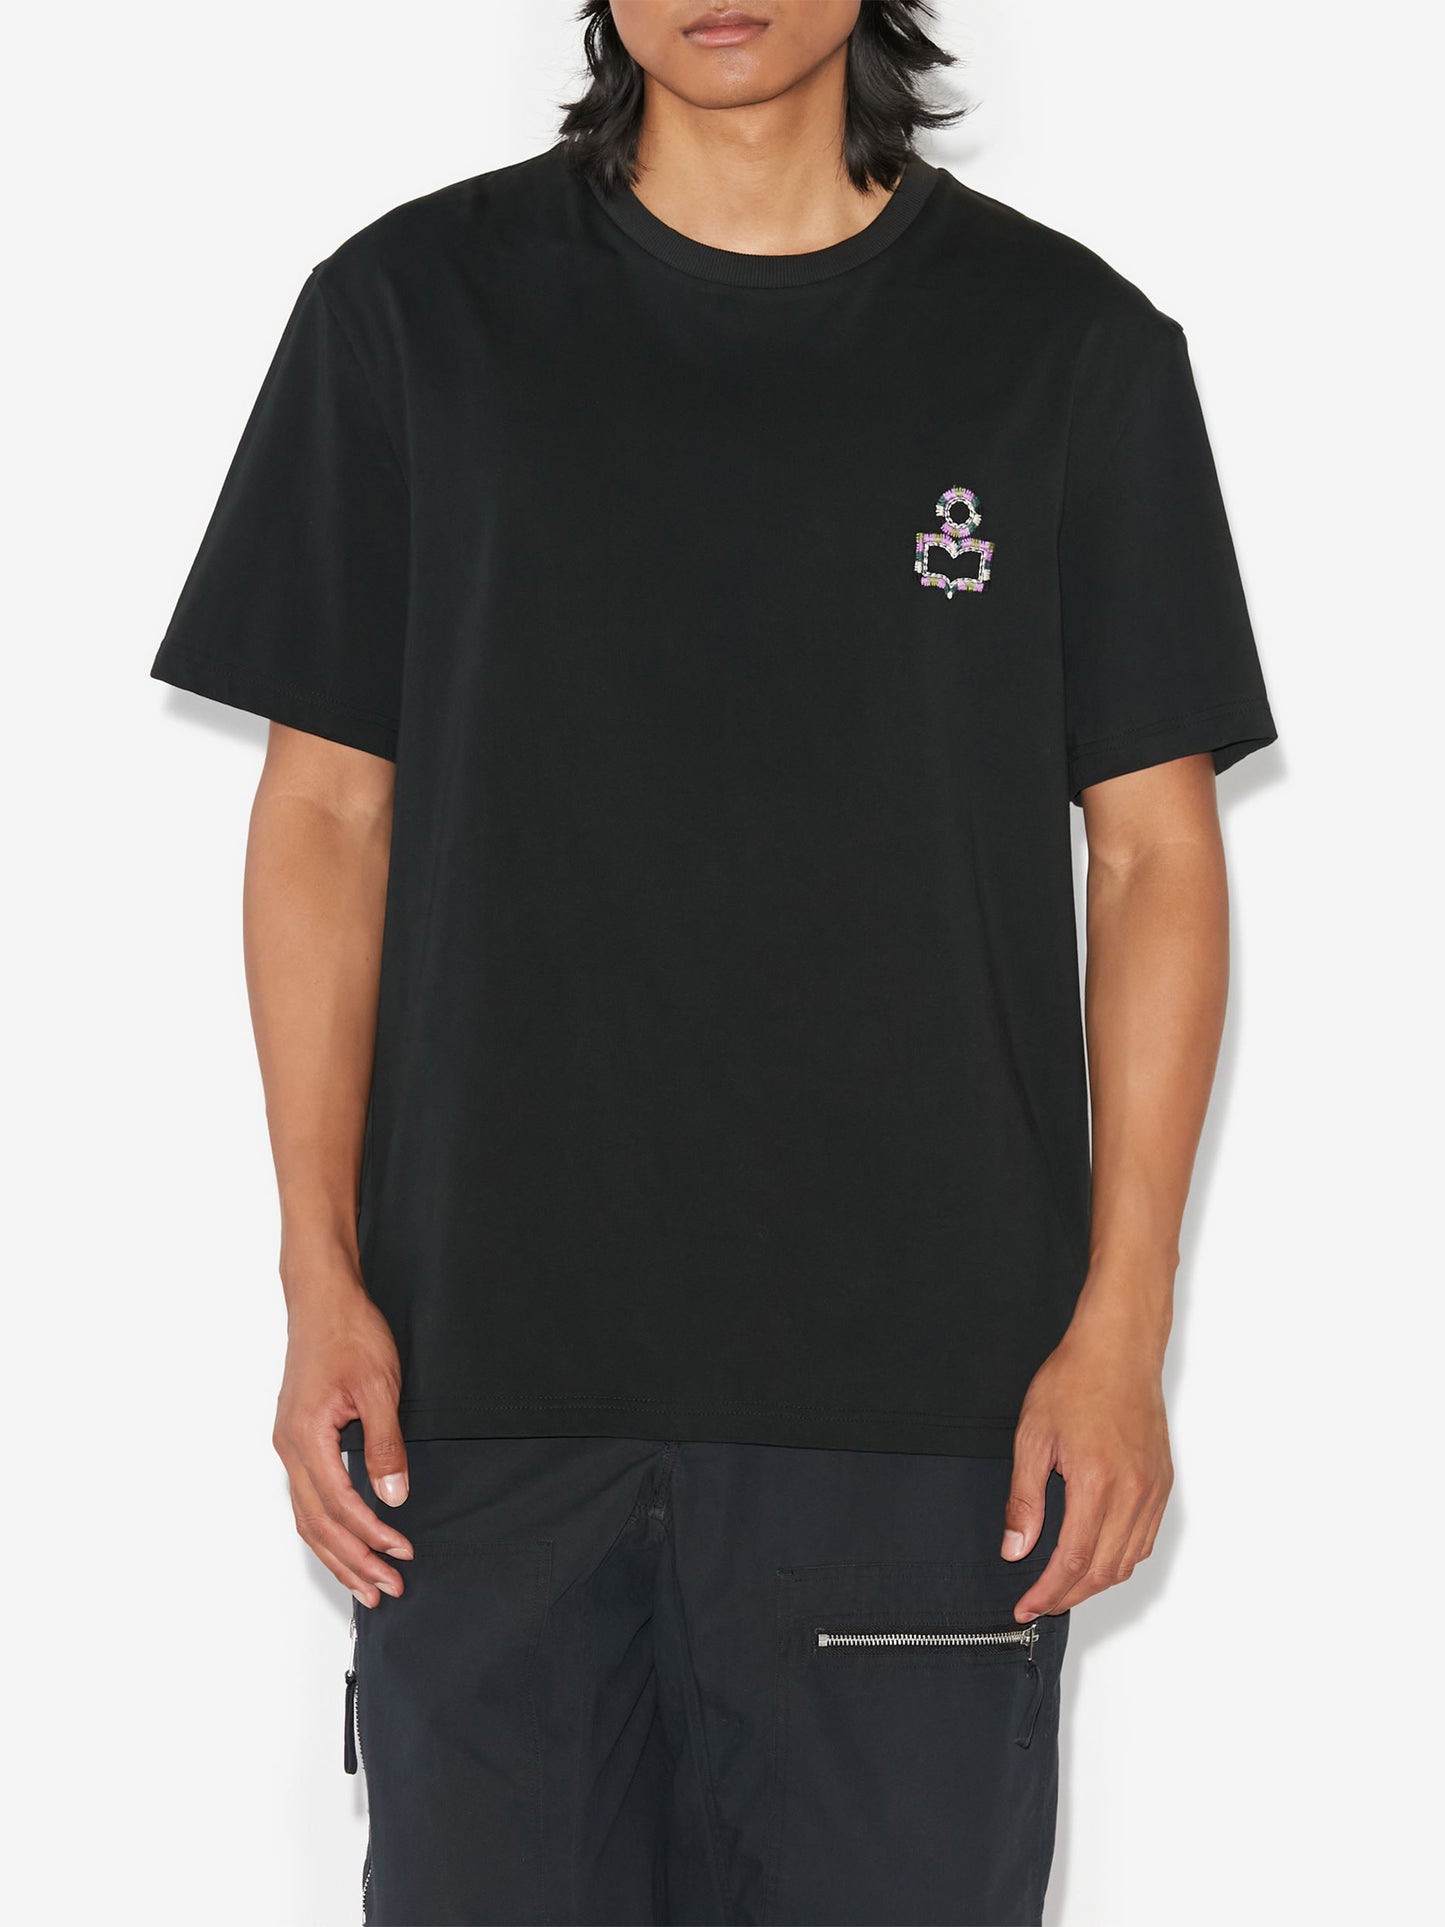 MARANT - Hugo T-Shirt mit Logo-Stickerei Schwarz - Black